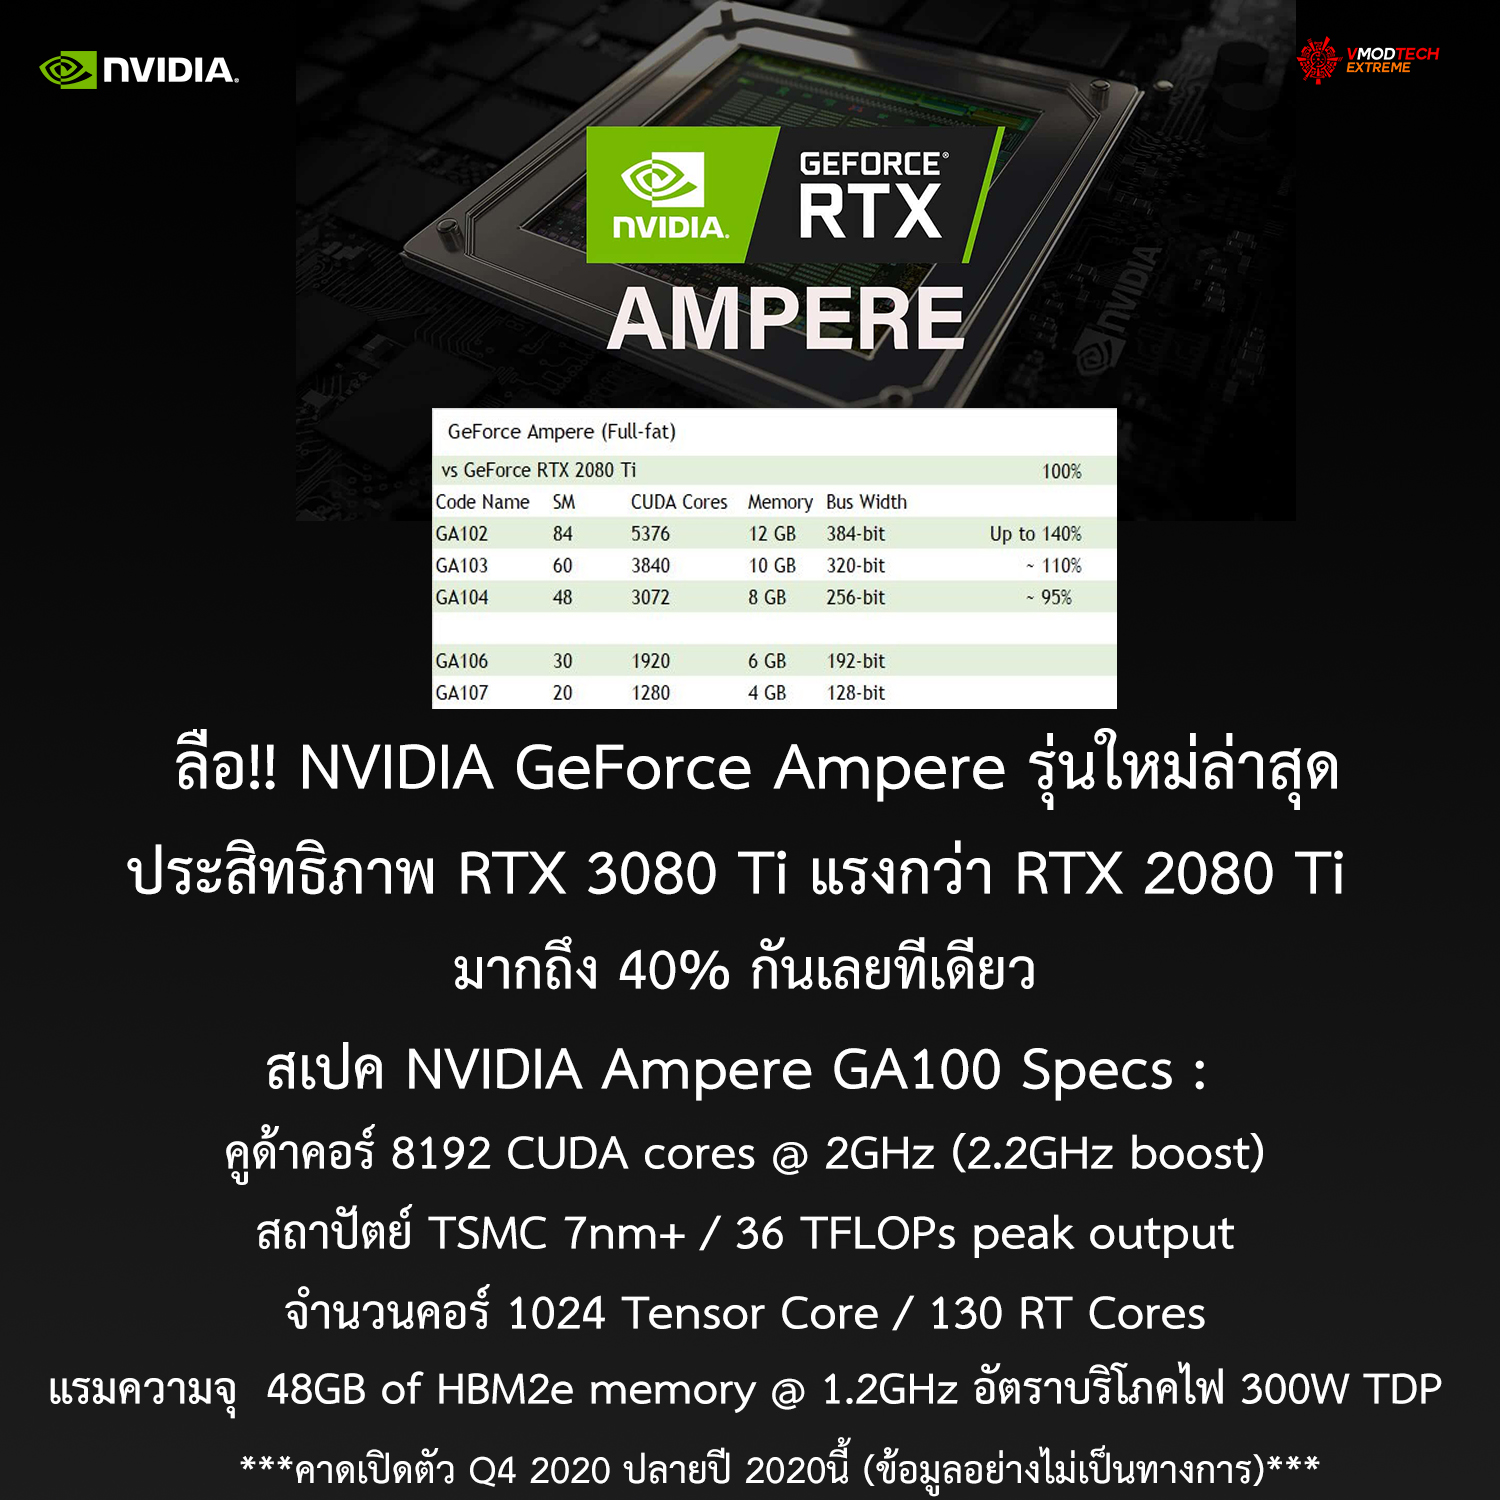 nvidia ampere q4 2020 ลือ!! NVIDIA GeForce Ampere รุ่นใหม่ล่าสุดประสิทธิภาพ RTX 3080 Ti แรงกว่า RTX 2080 Ti มากถึง 40% กันเลยทีเดียว 